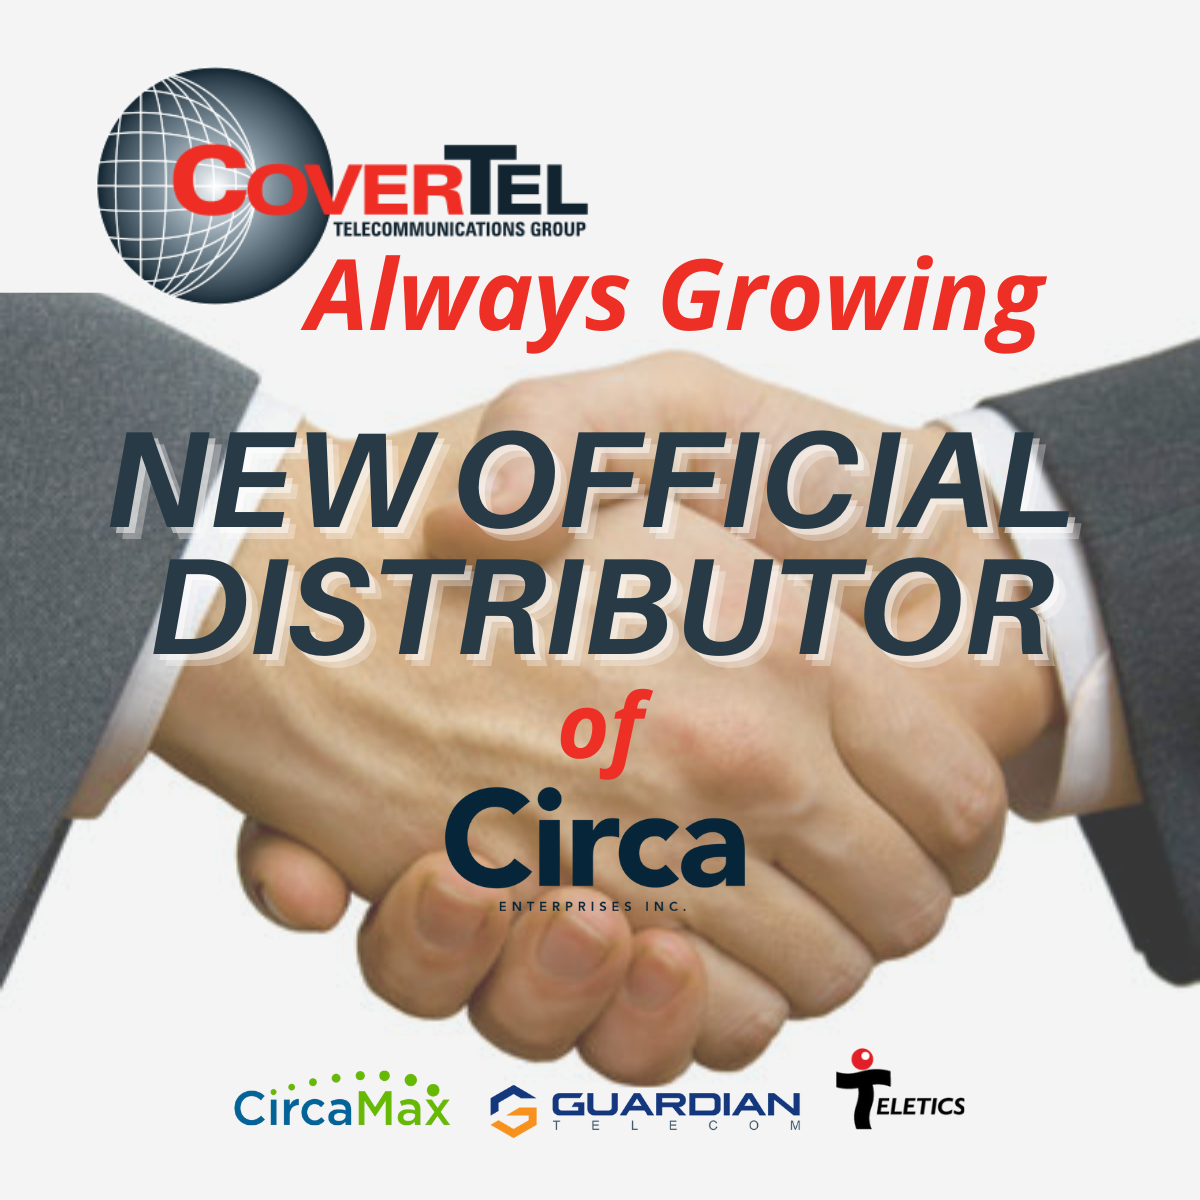 Circa Ent and CoverTel partnership